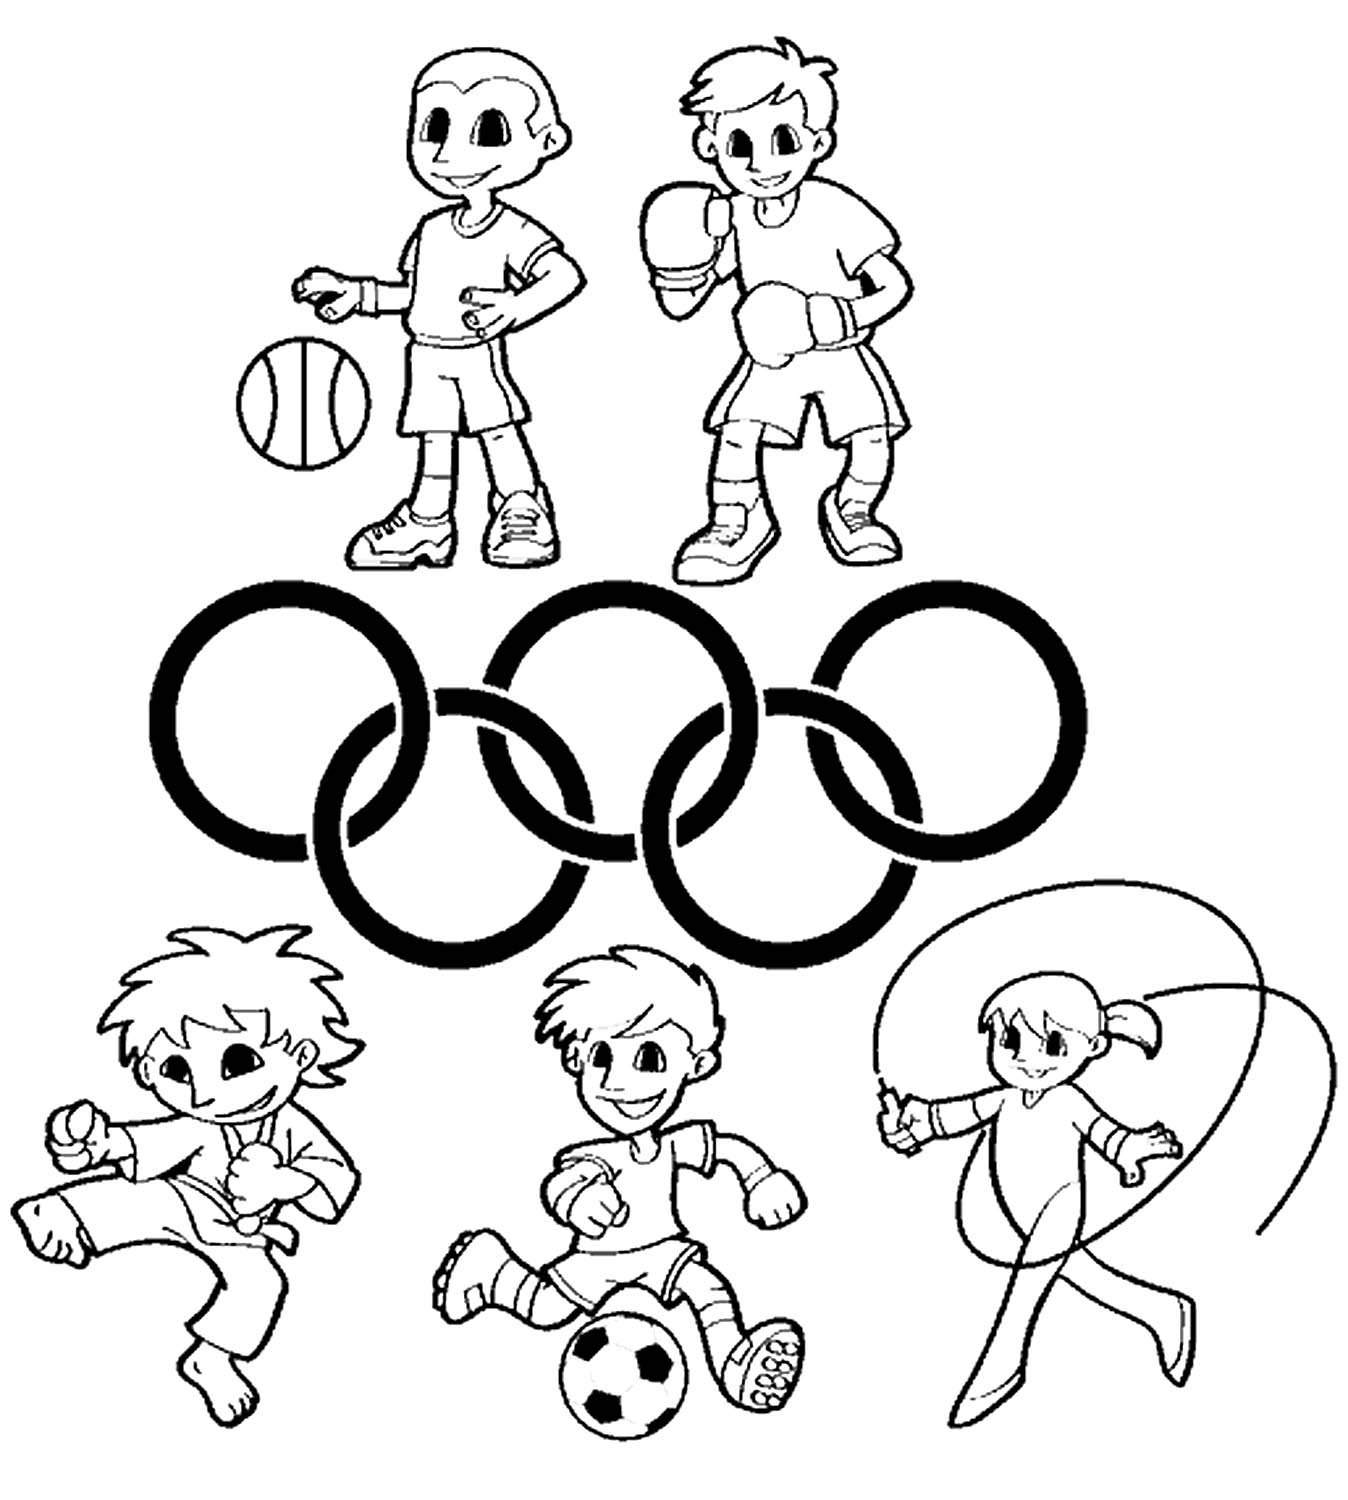 Олимпийское золото в Беларусь привезли: